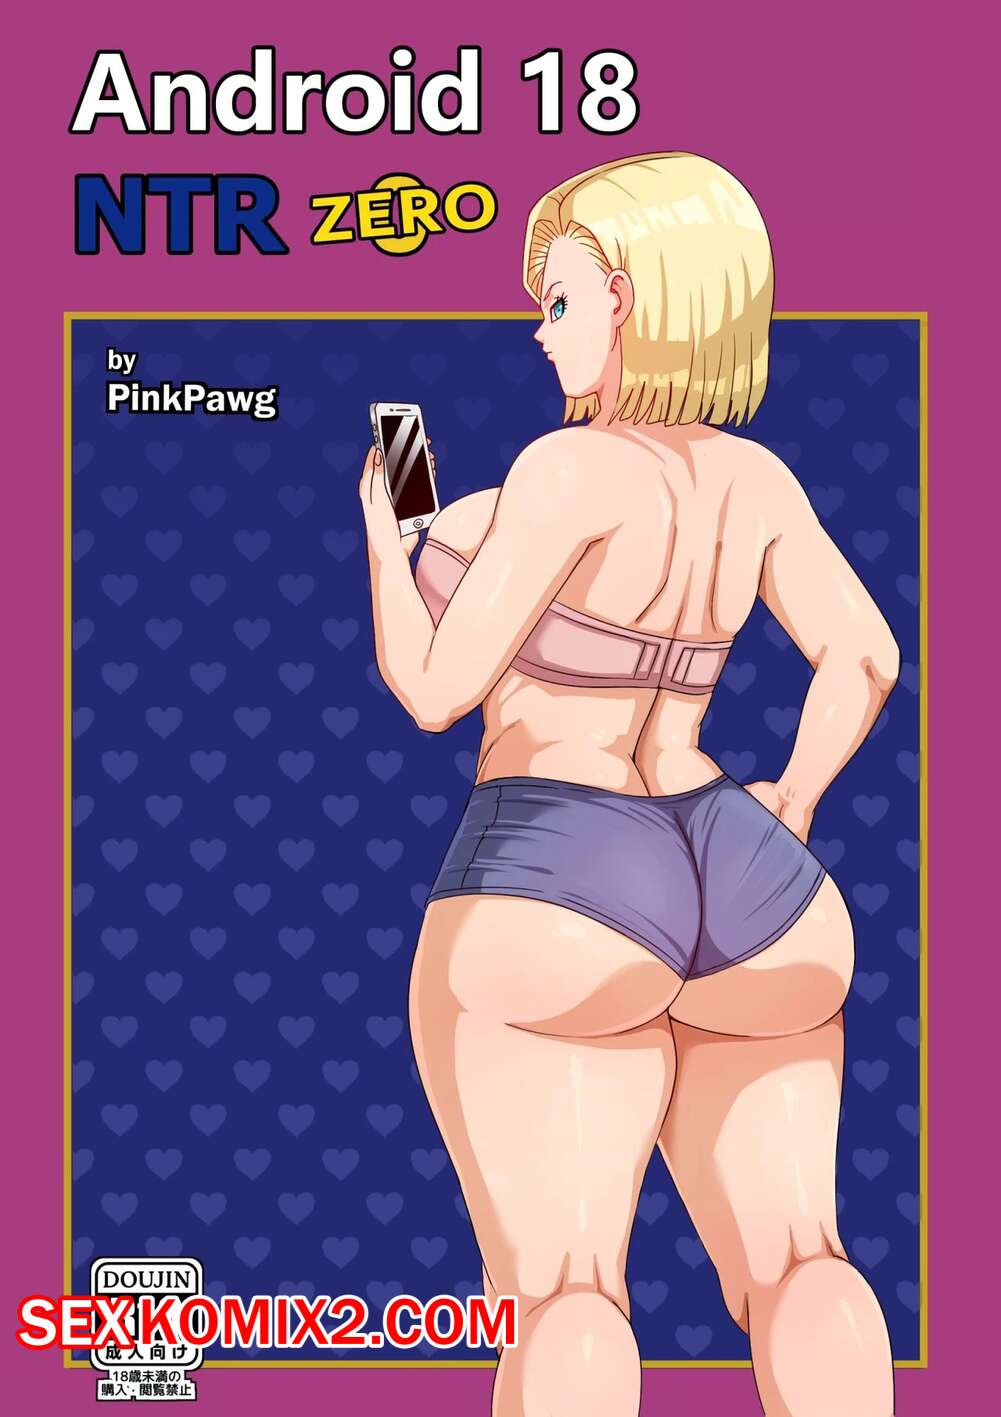 ✅️ Порно комикс Dragon Ball. Андроид 18 НТР ноль. Android 18 NTR Zero. Pink  Pawg секс комикс блондинка Андроид 18 | Порно комиксы на русском языке  только для взрослых | sexkomix2.com